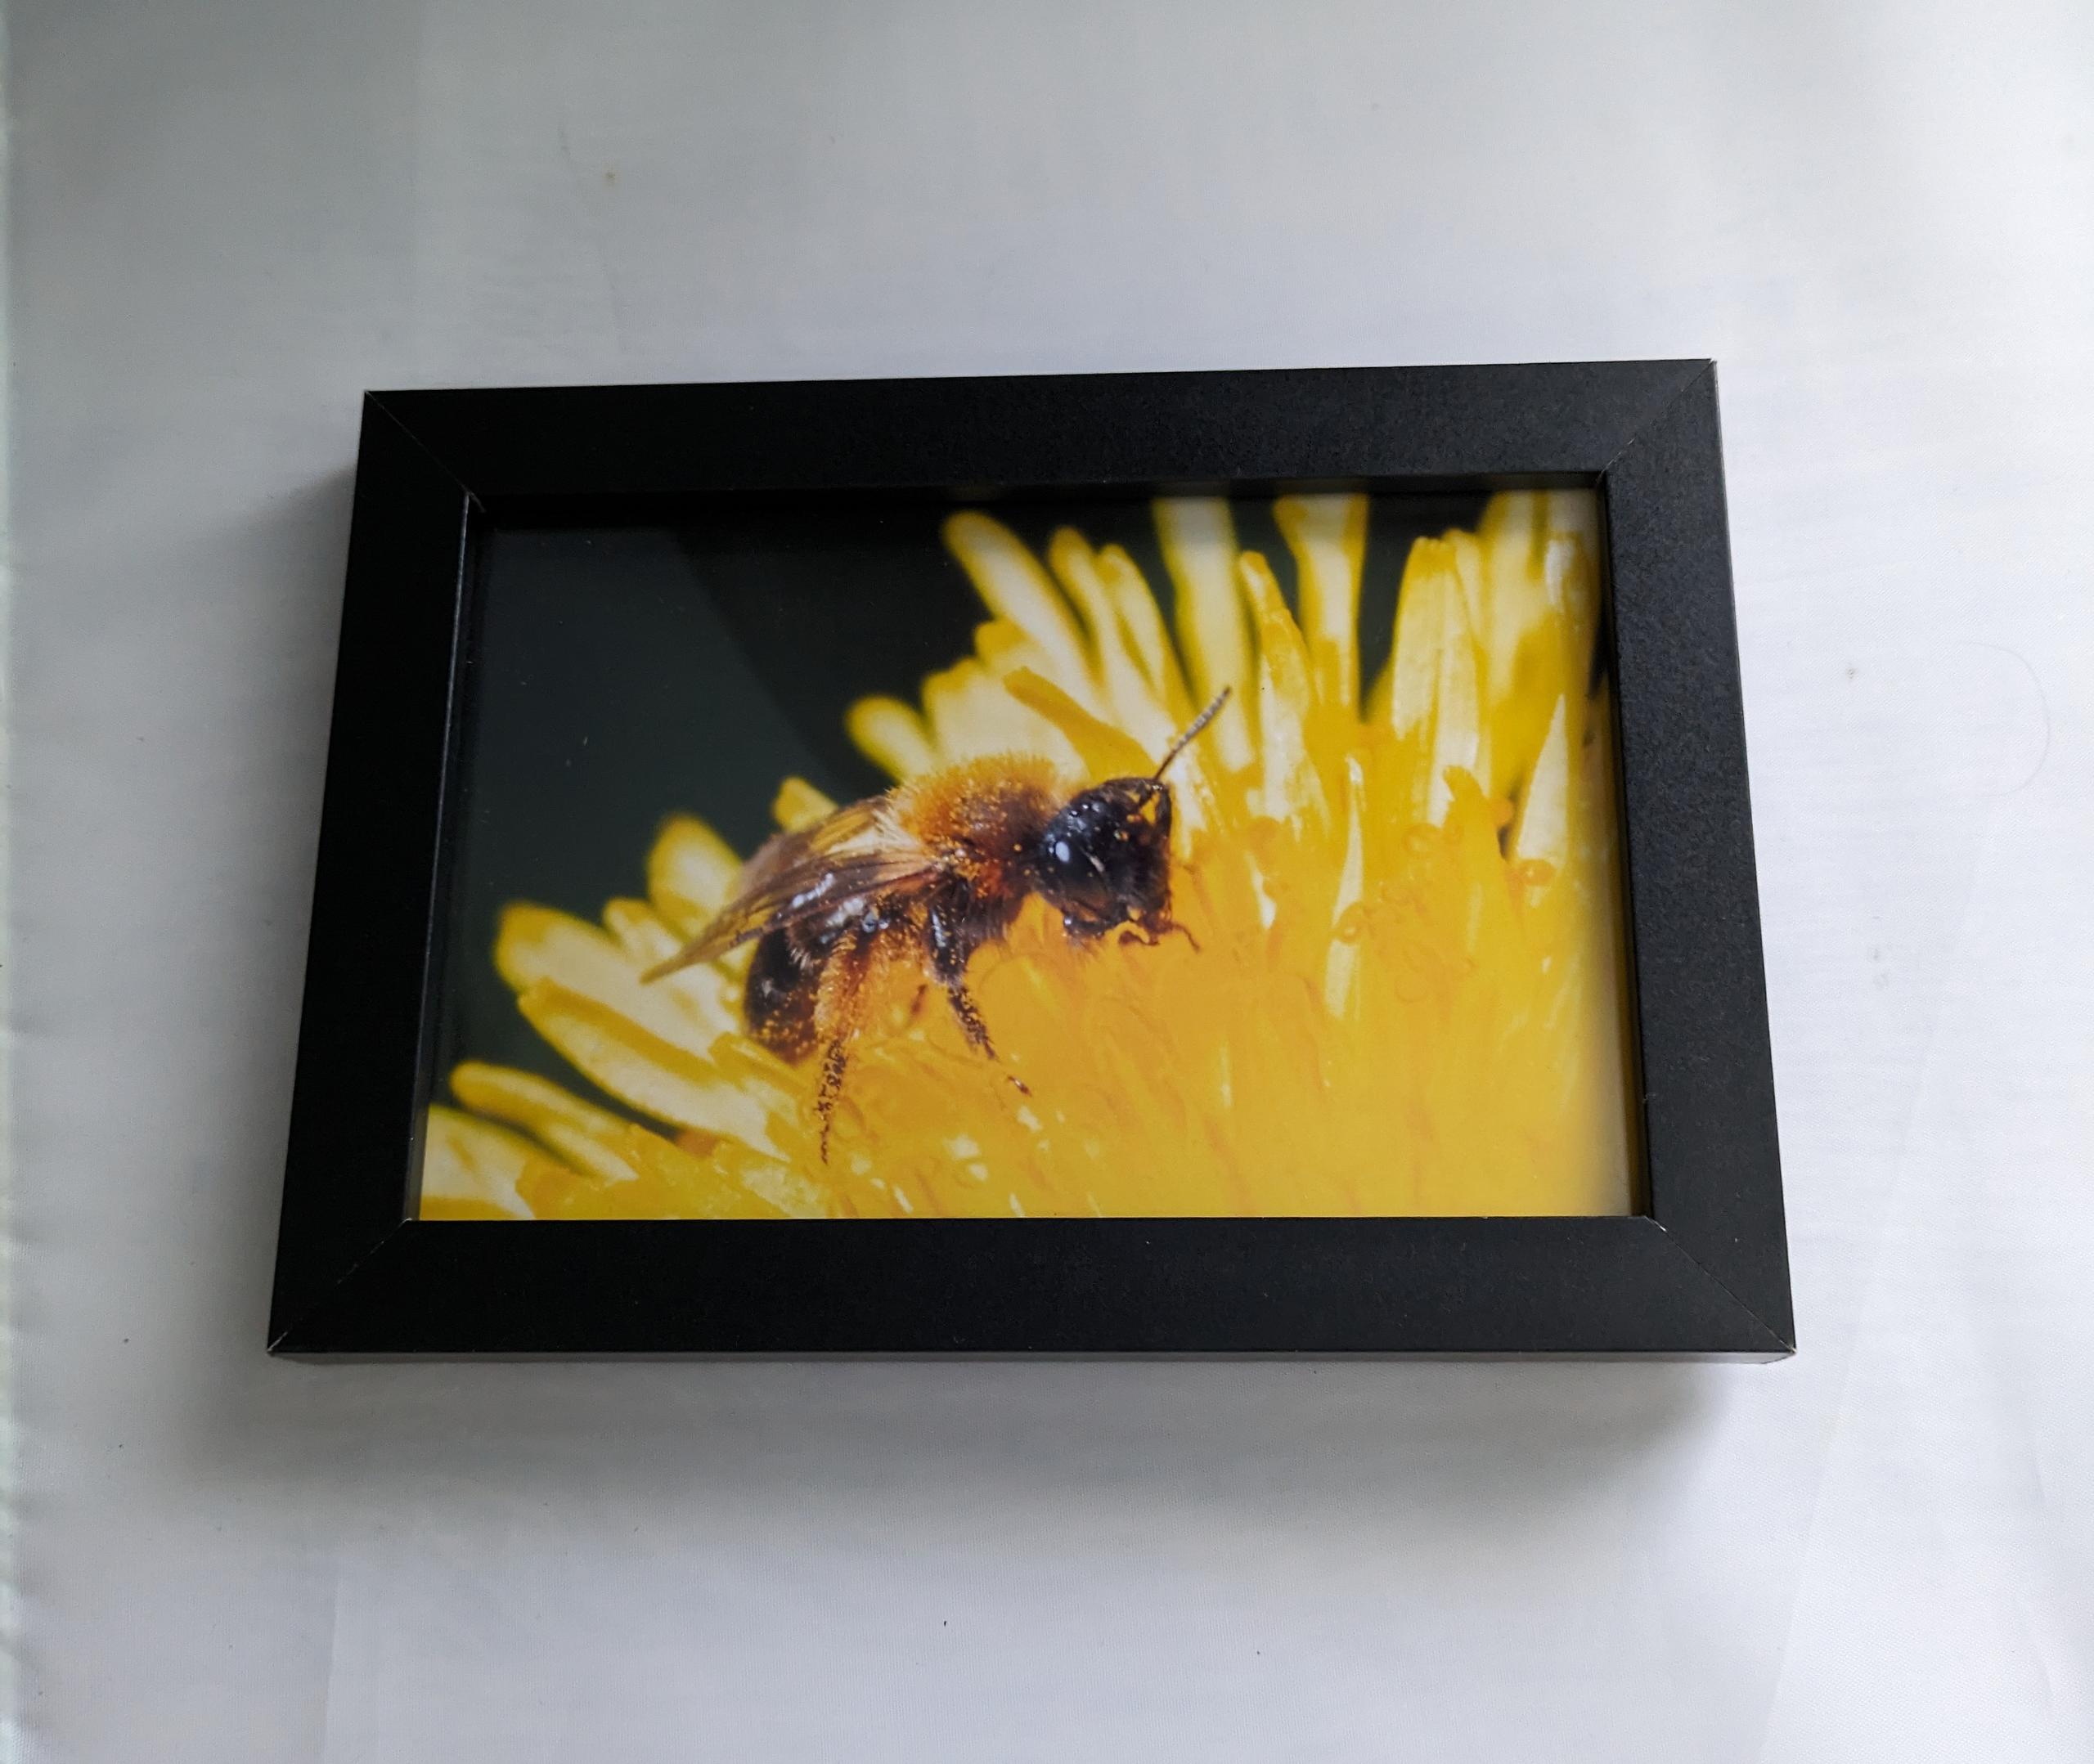 Mining bee framed photo